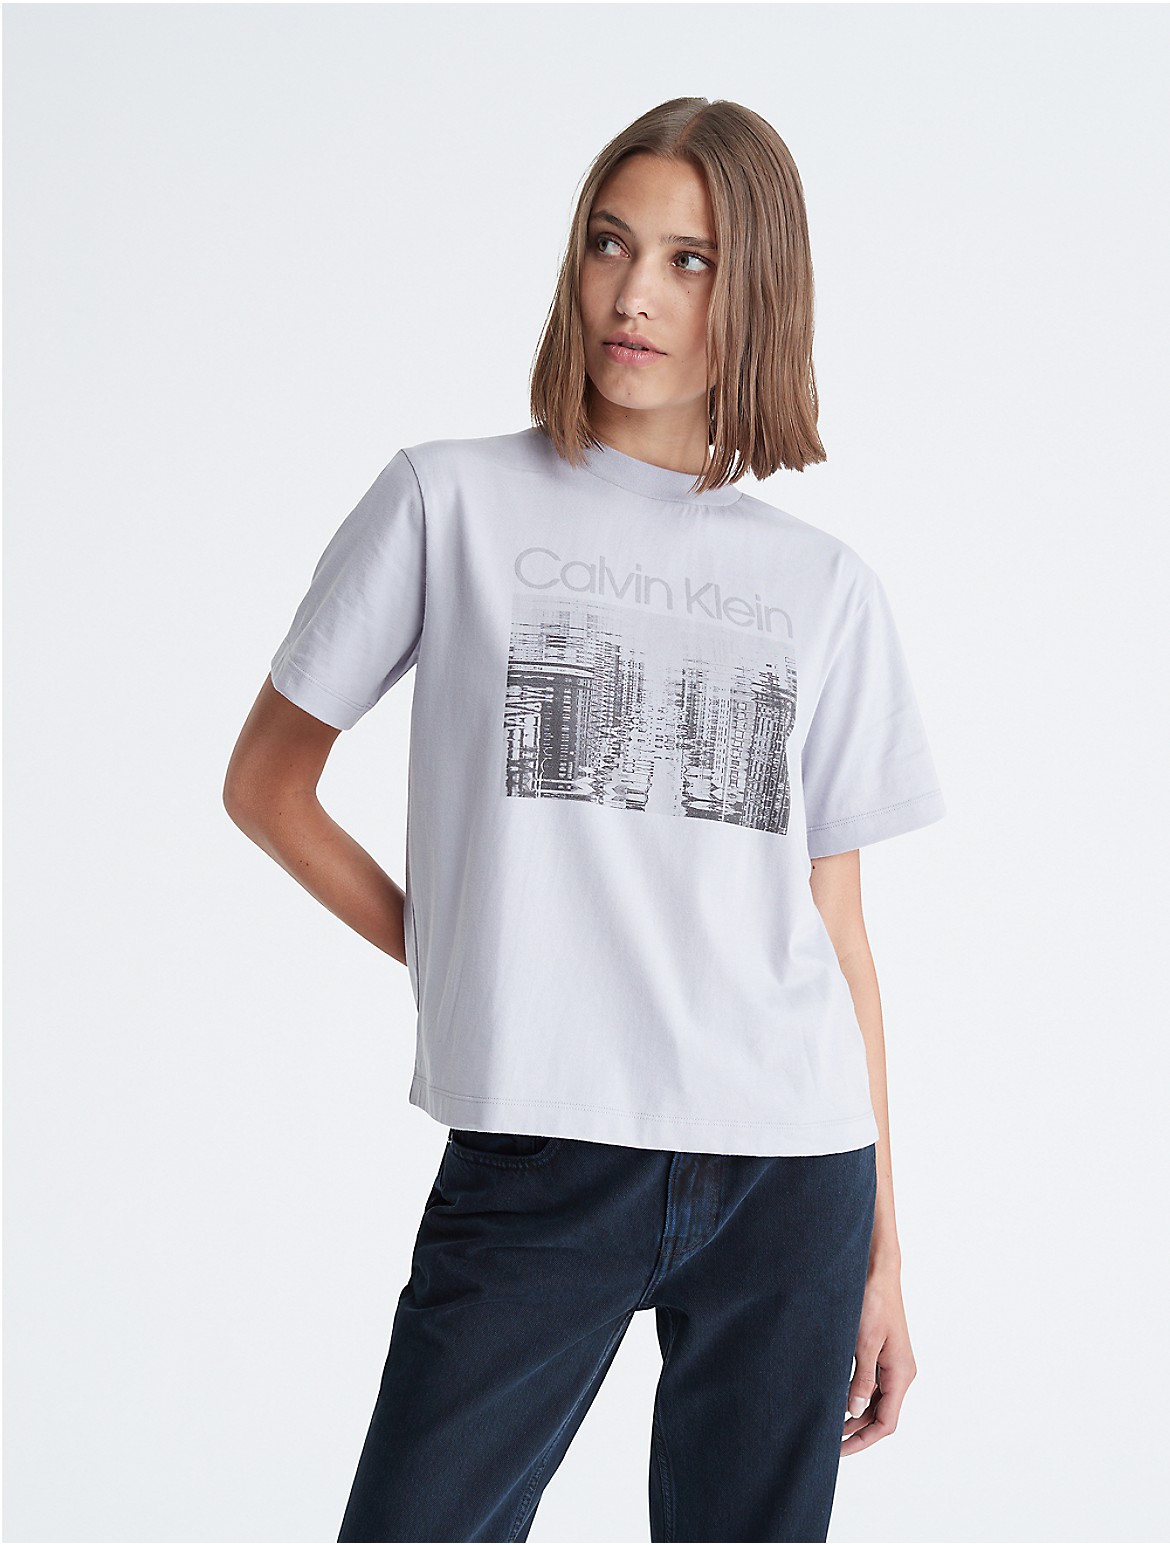 Calvin Klein Women's City Reflection Graphic Crewneck T-Shirt - Grey - XS